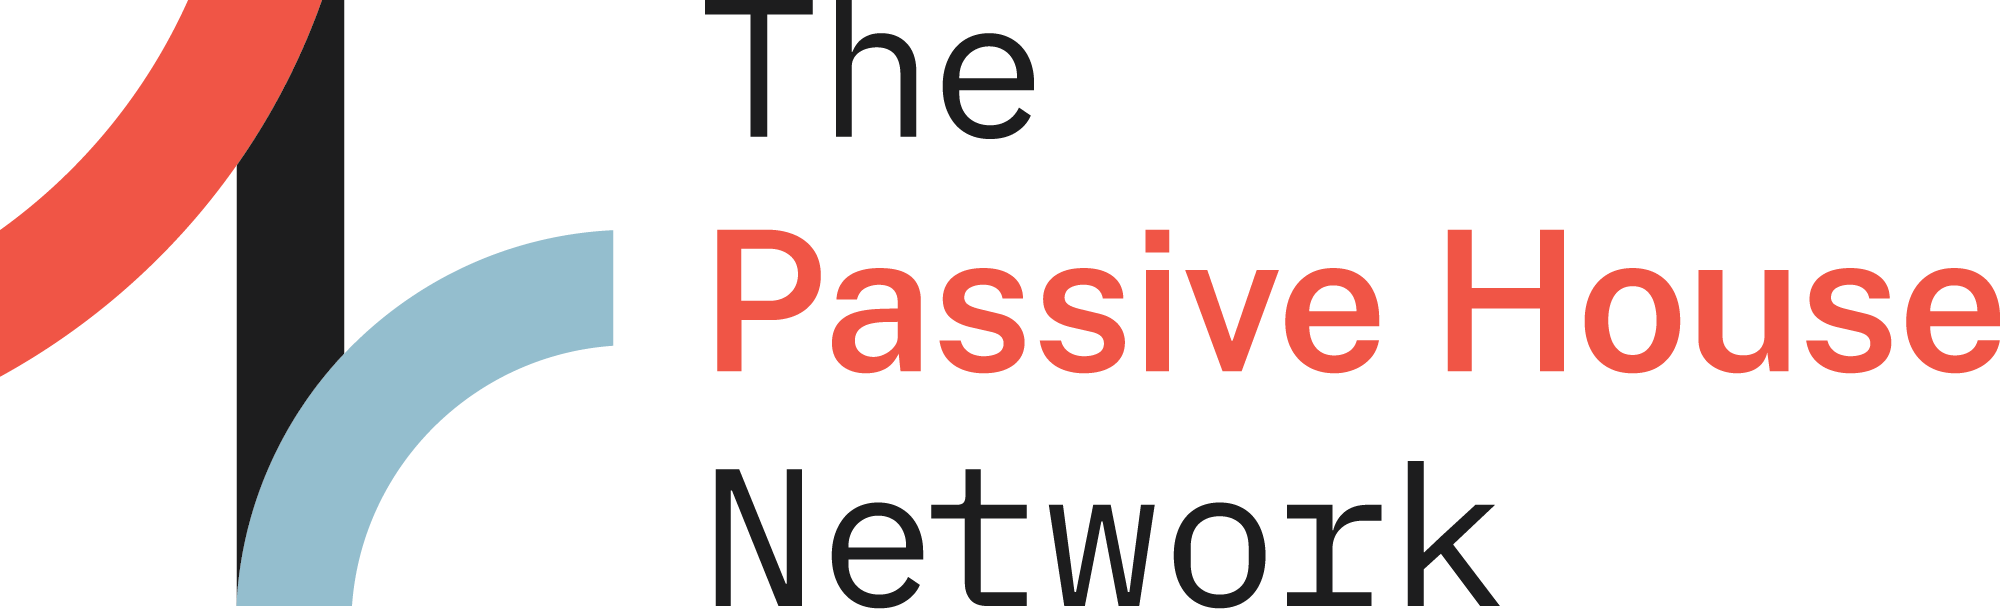 The Passive House Network company logo